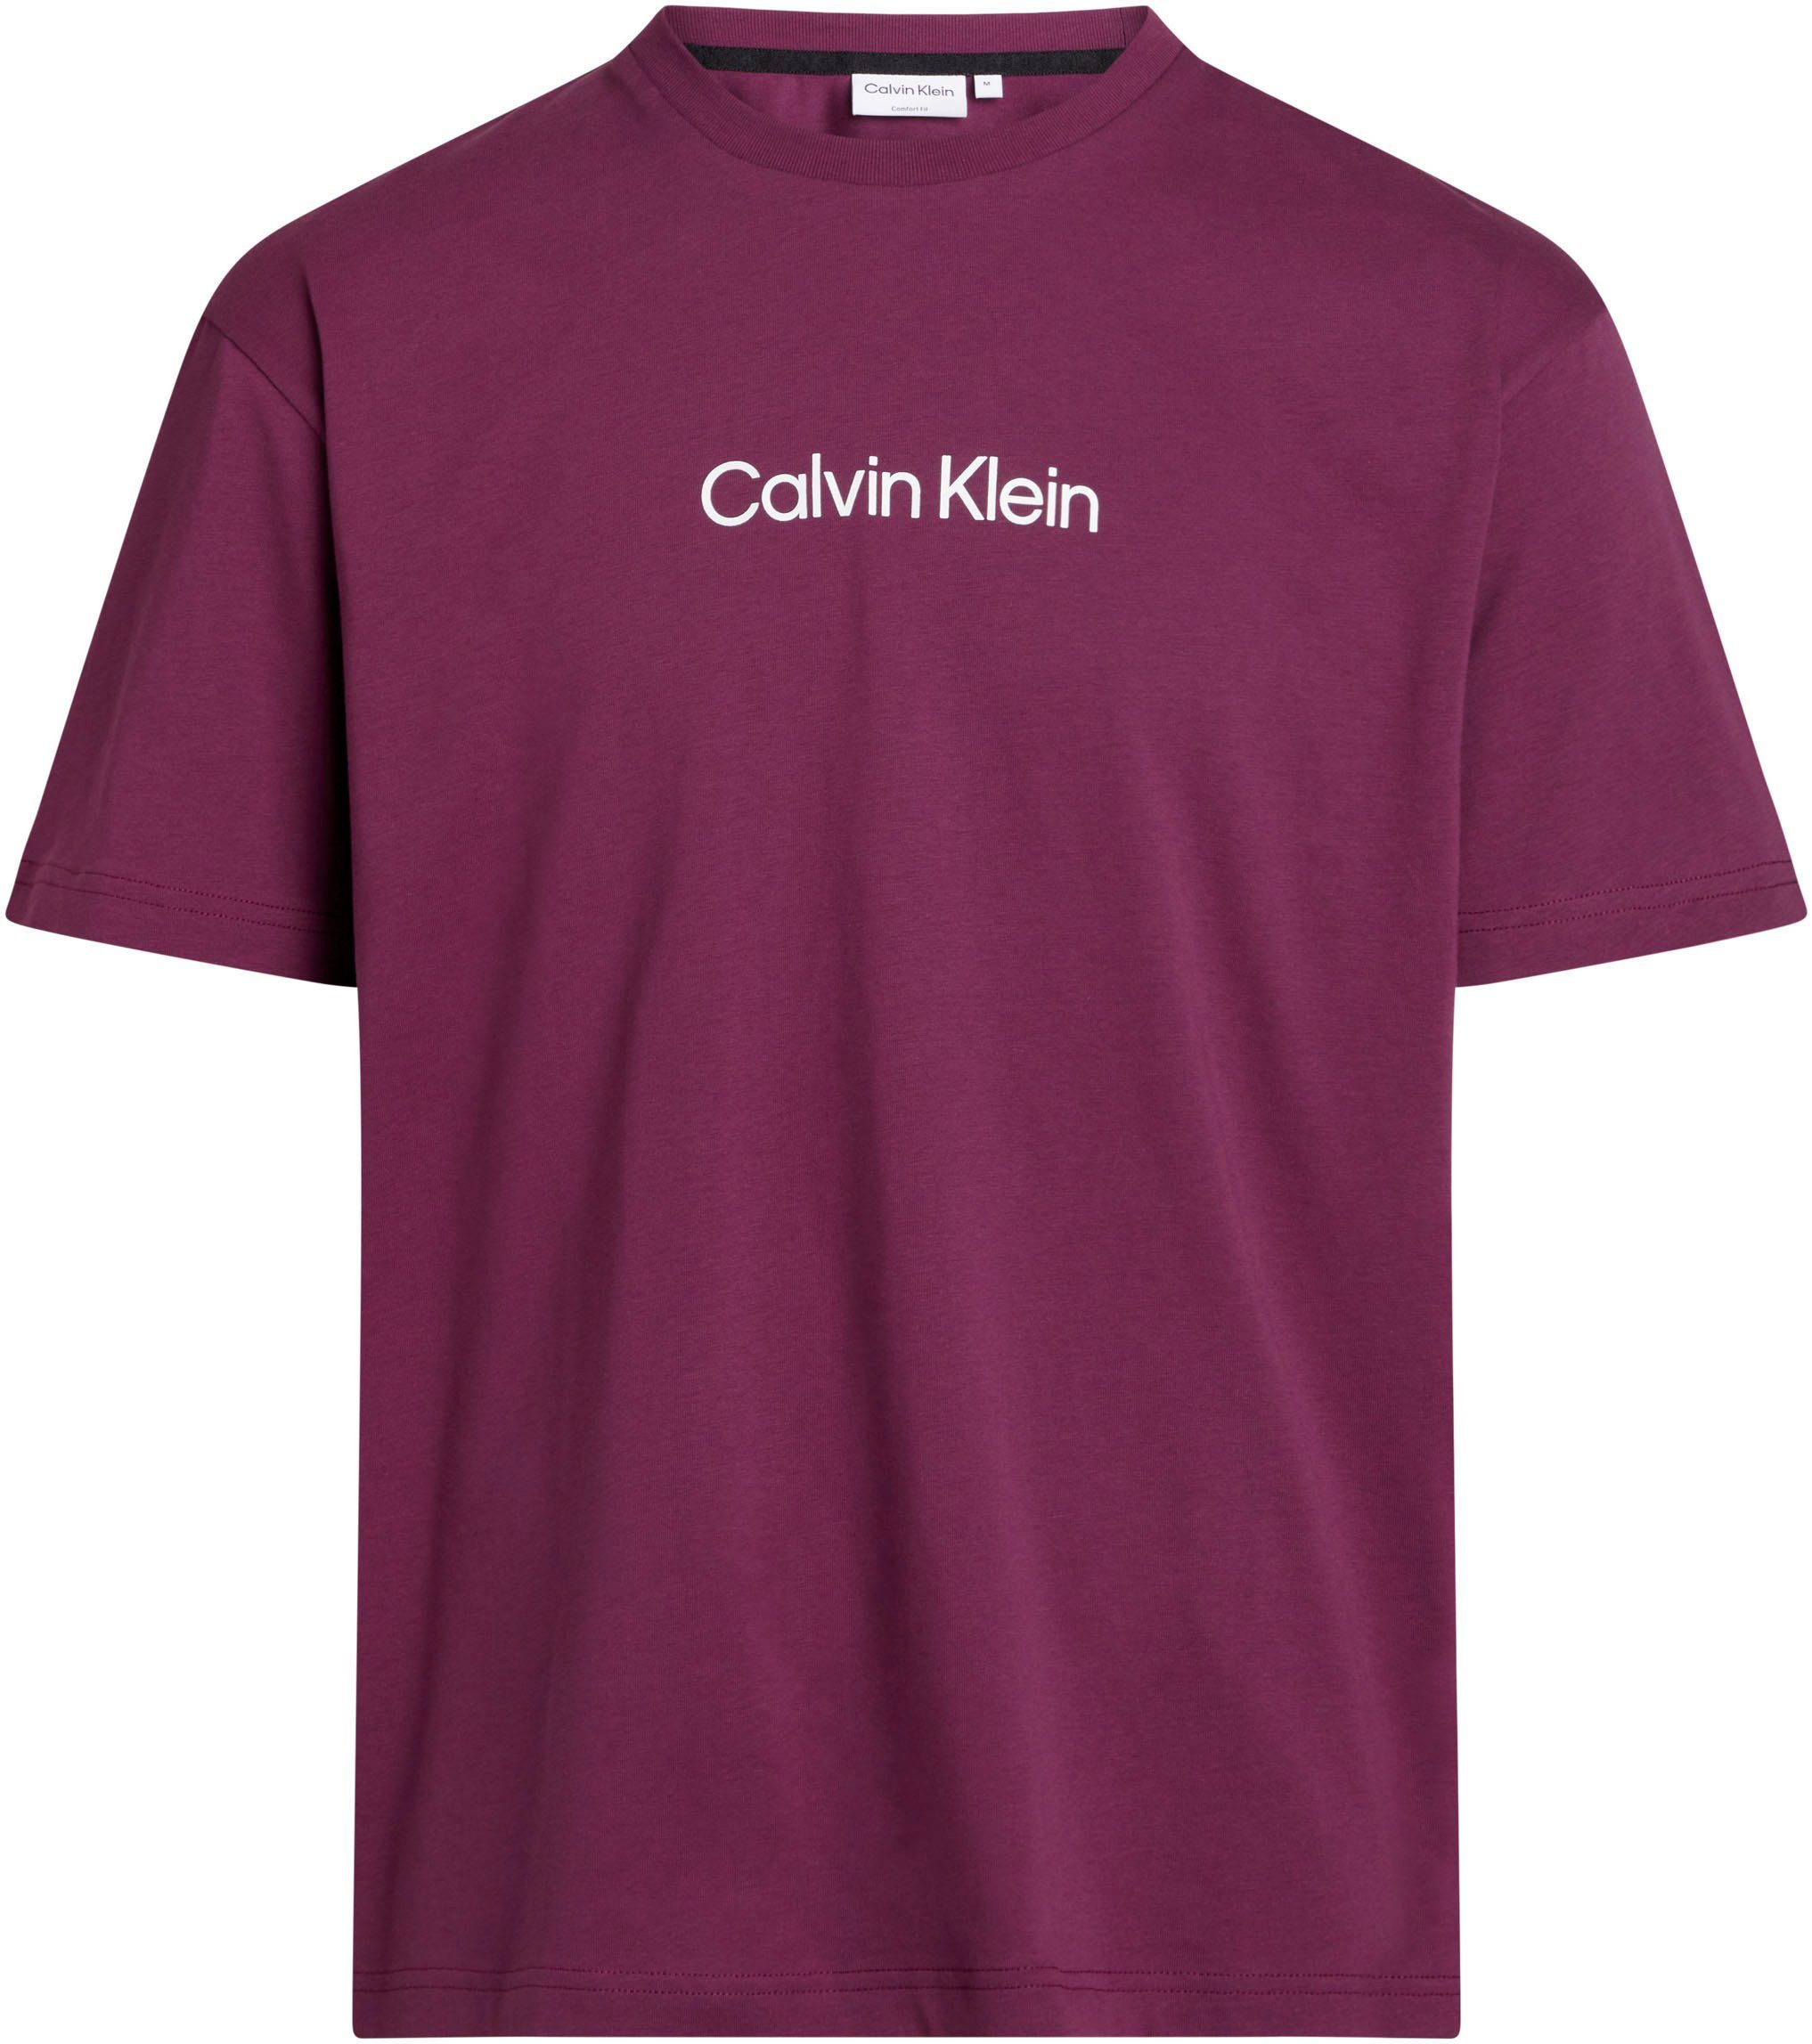 Calvin Klein T-Shirt HERO mit aufgedrucktem T-SHIRT COMFORT LOGO Markenlabel Italian Plum